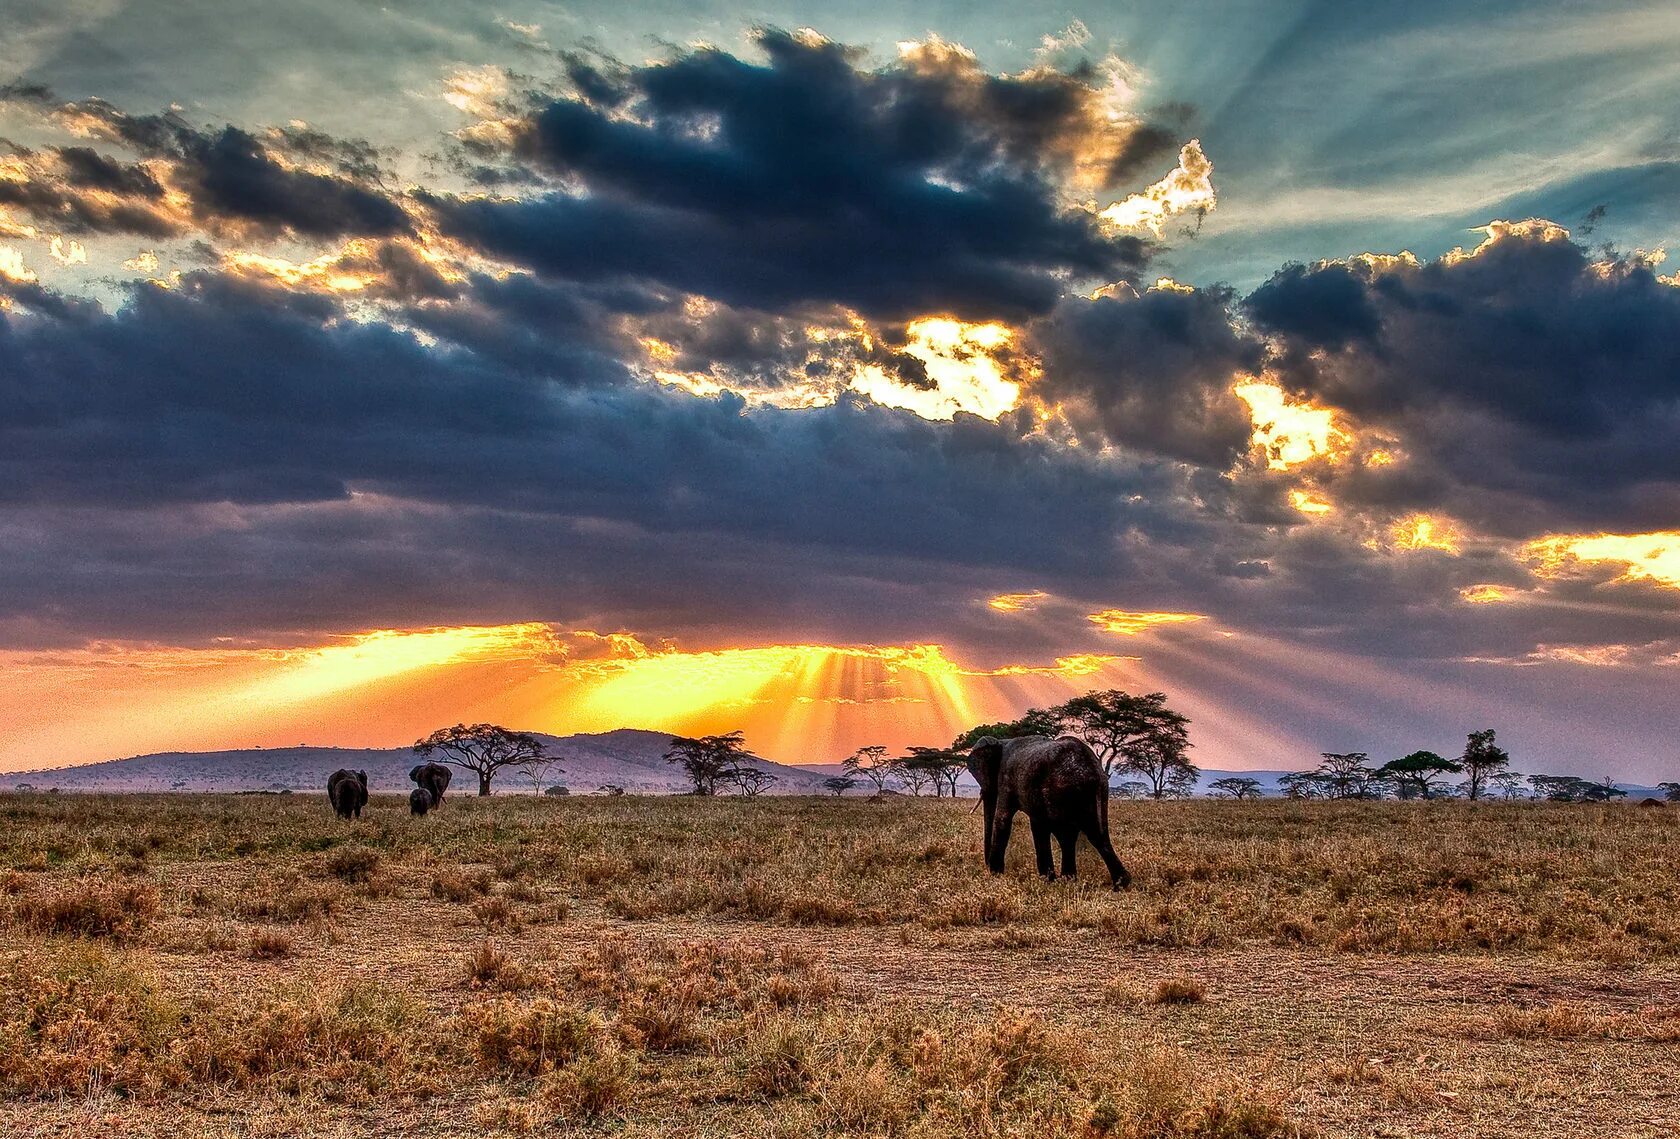 See africa. Национальный парк Серенгети Танзания. Сафари в Танзании парк Серенгети. Национальный парк Серенгети, Танзания, Африка. Килиманджаро национальный парк Серенгети.